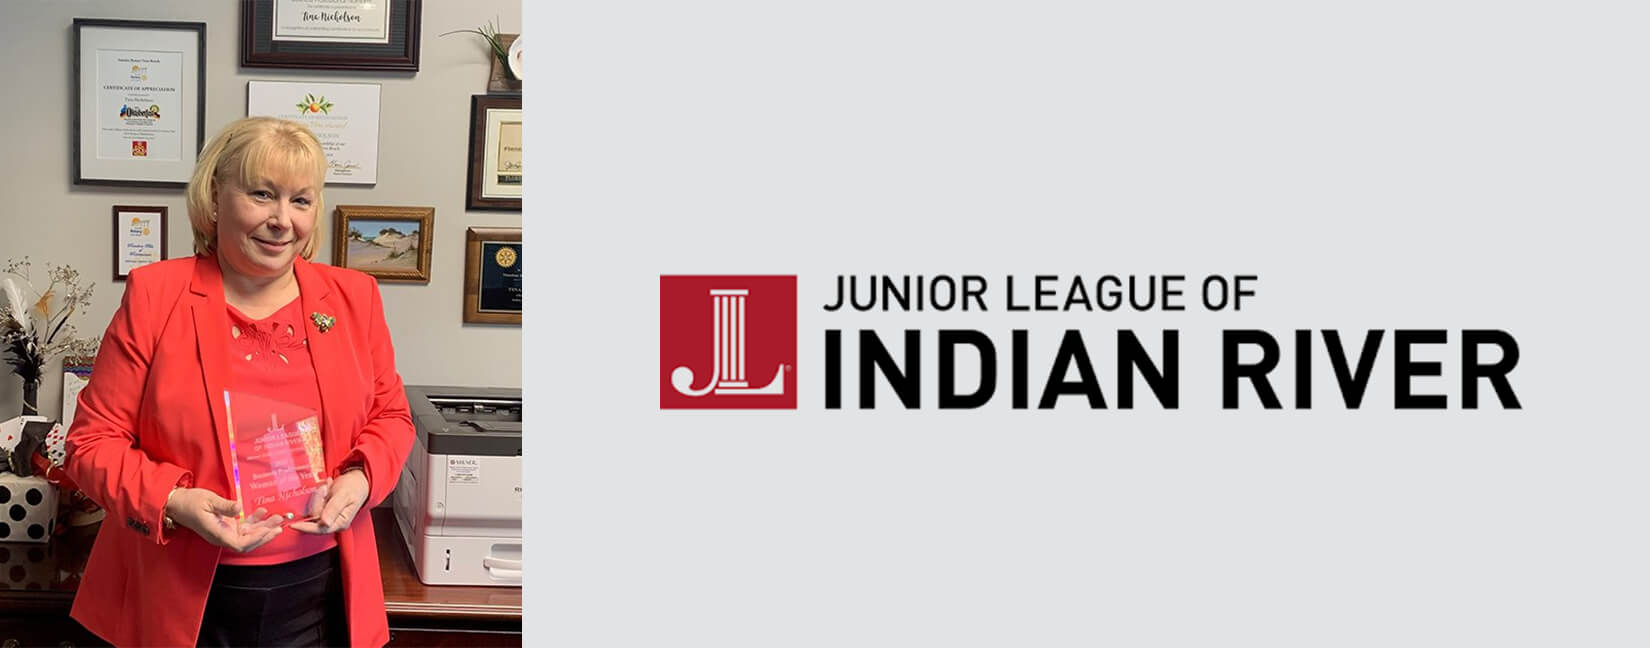 Tina Nicholson and Junior League of Indian River Logo